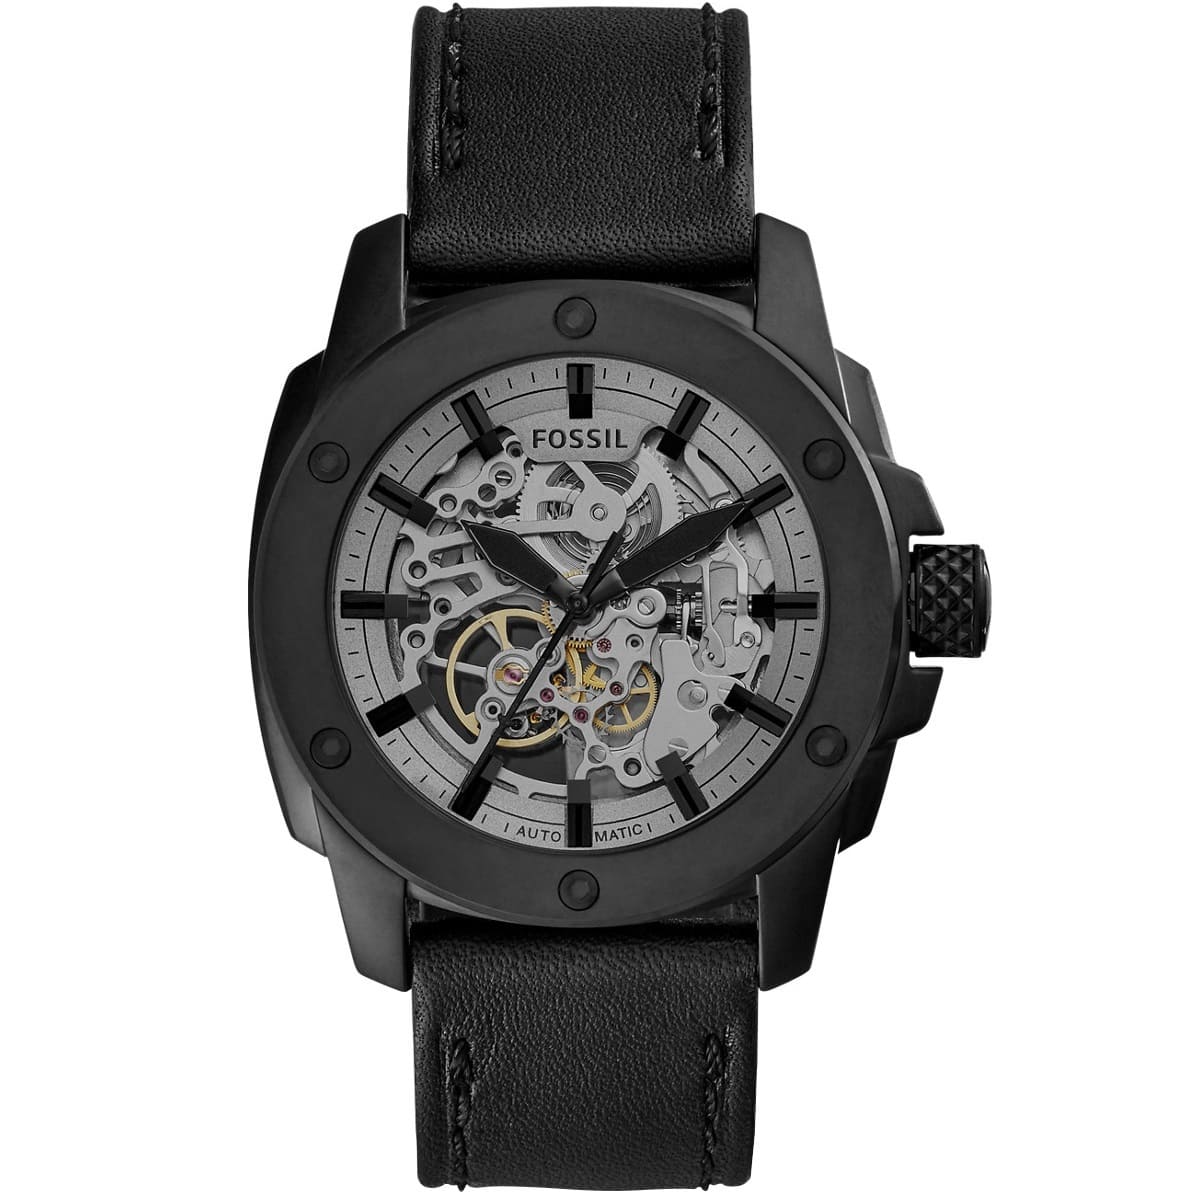 me3134-original-automatic-fossil-watch-black-leather-men